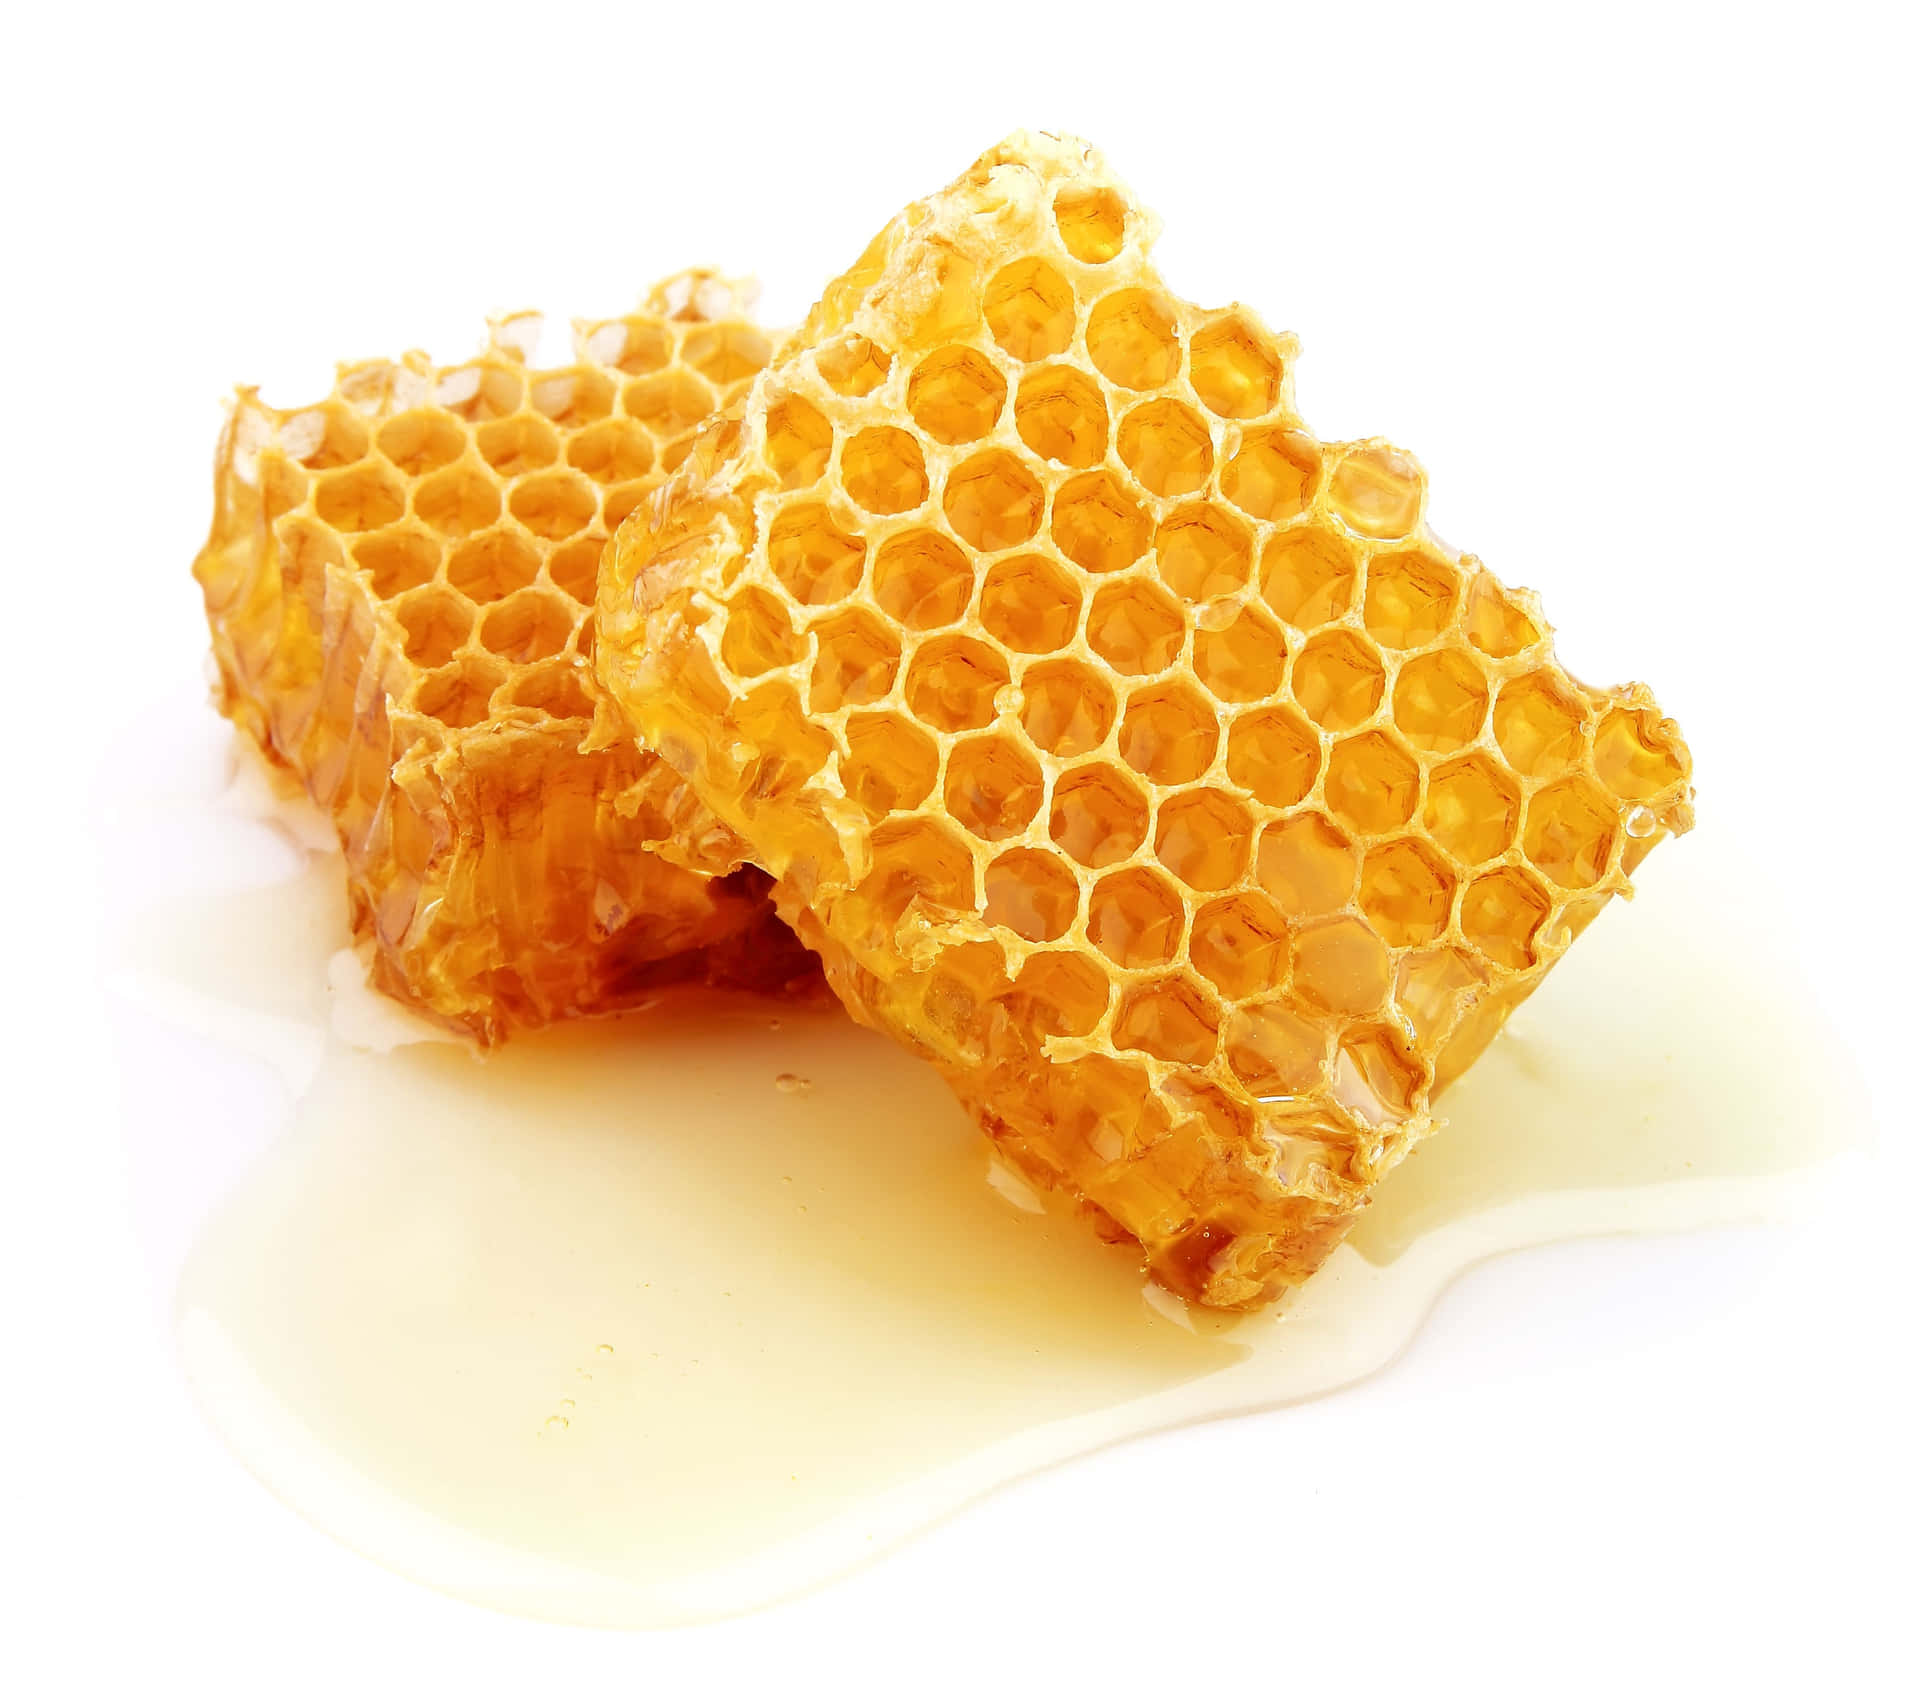 Honungskakormed Honung På En Vit Bakgrund